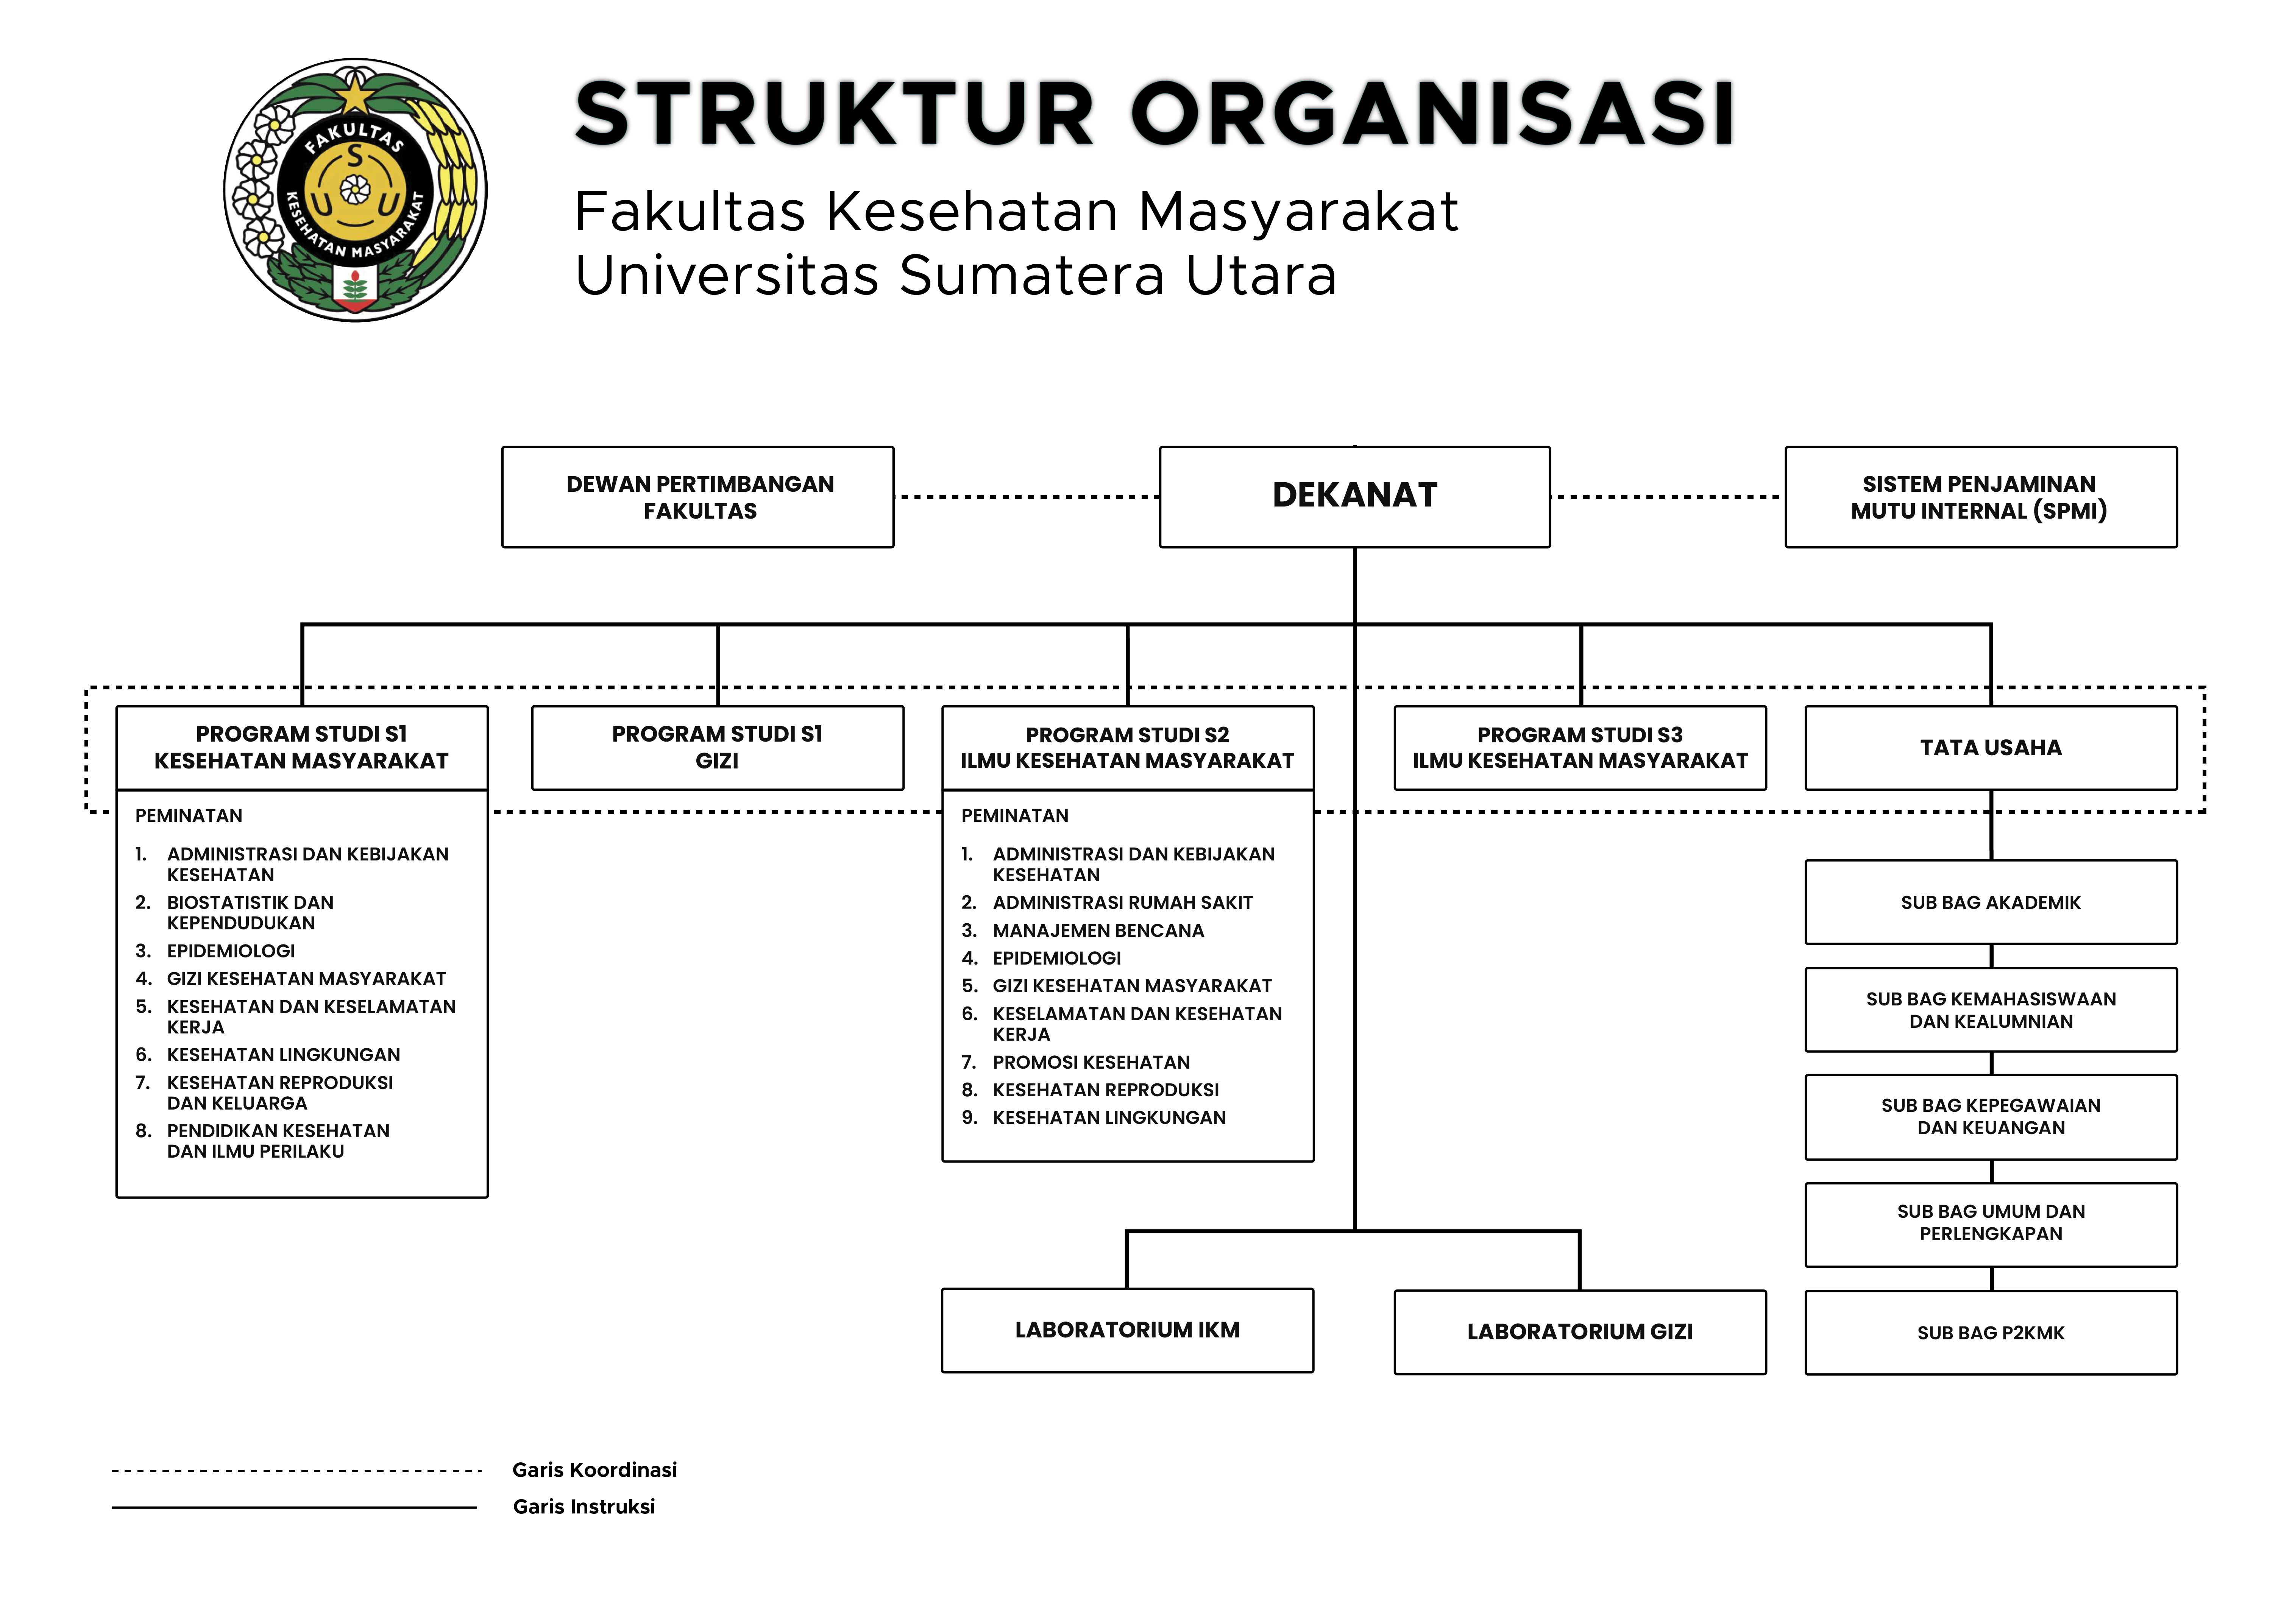 Struktur Organisasi new